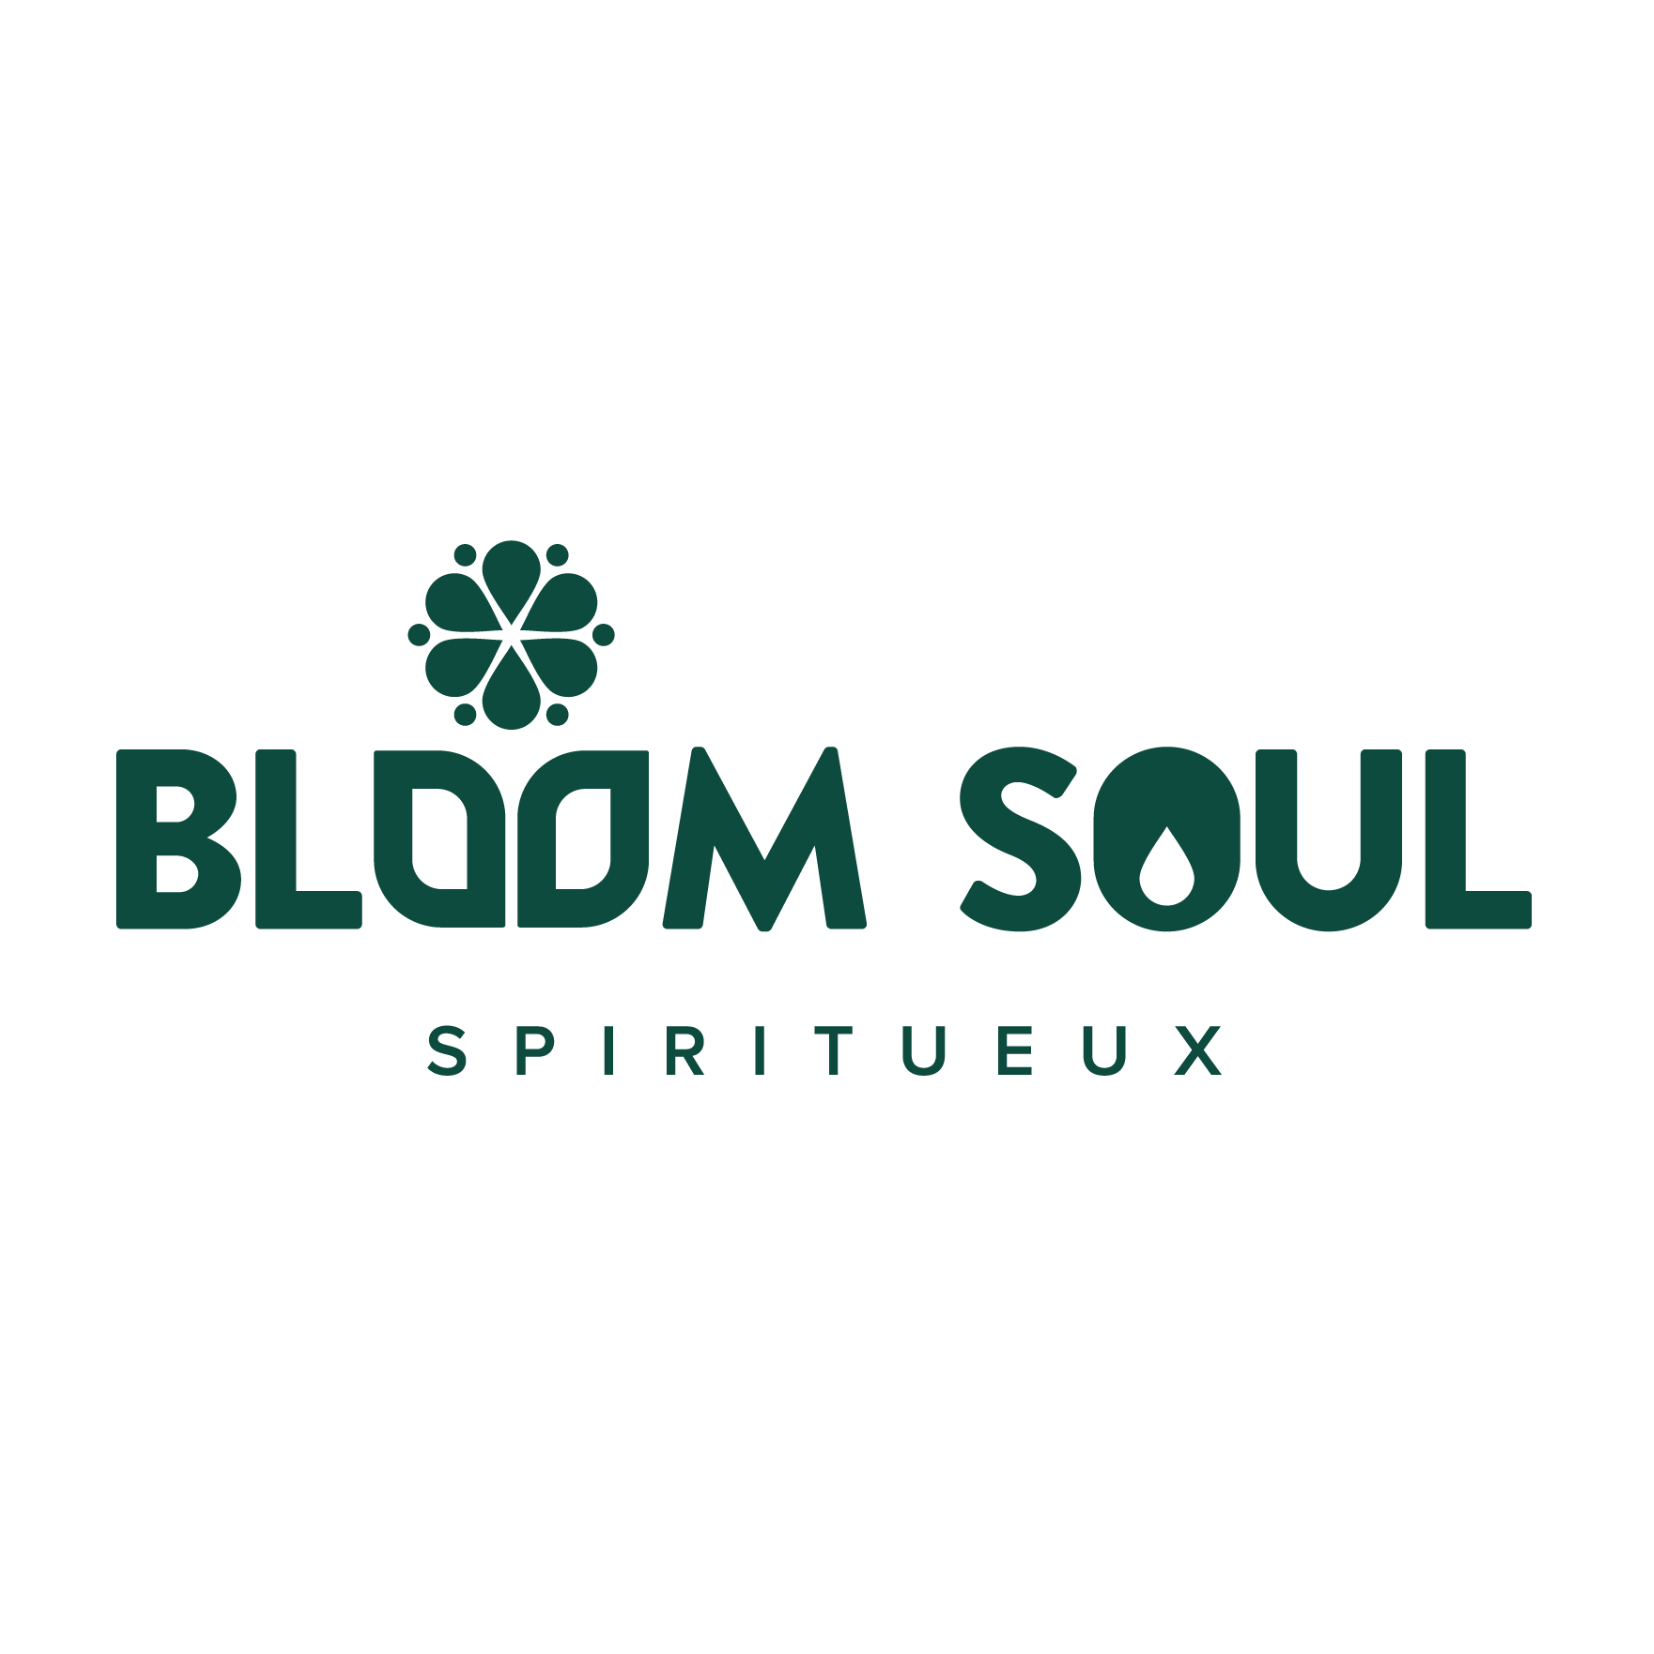  Bloom Soul